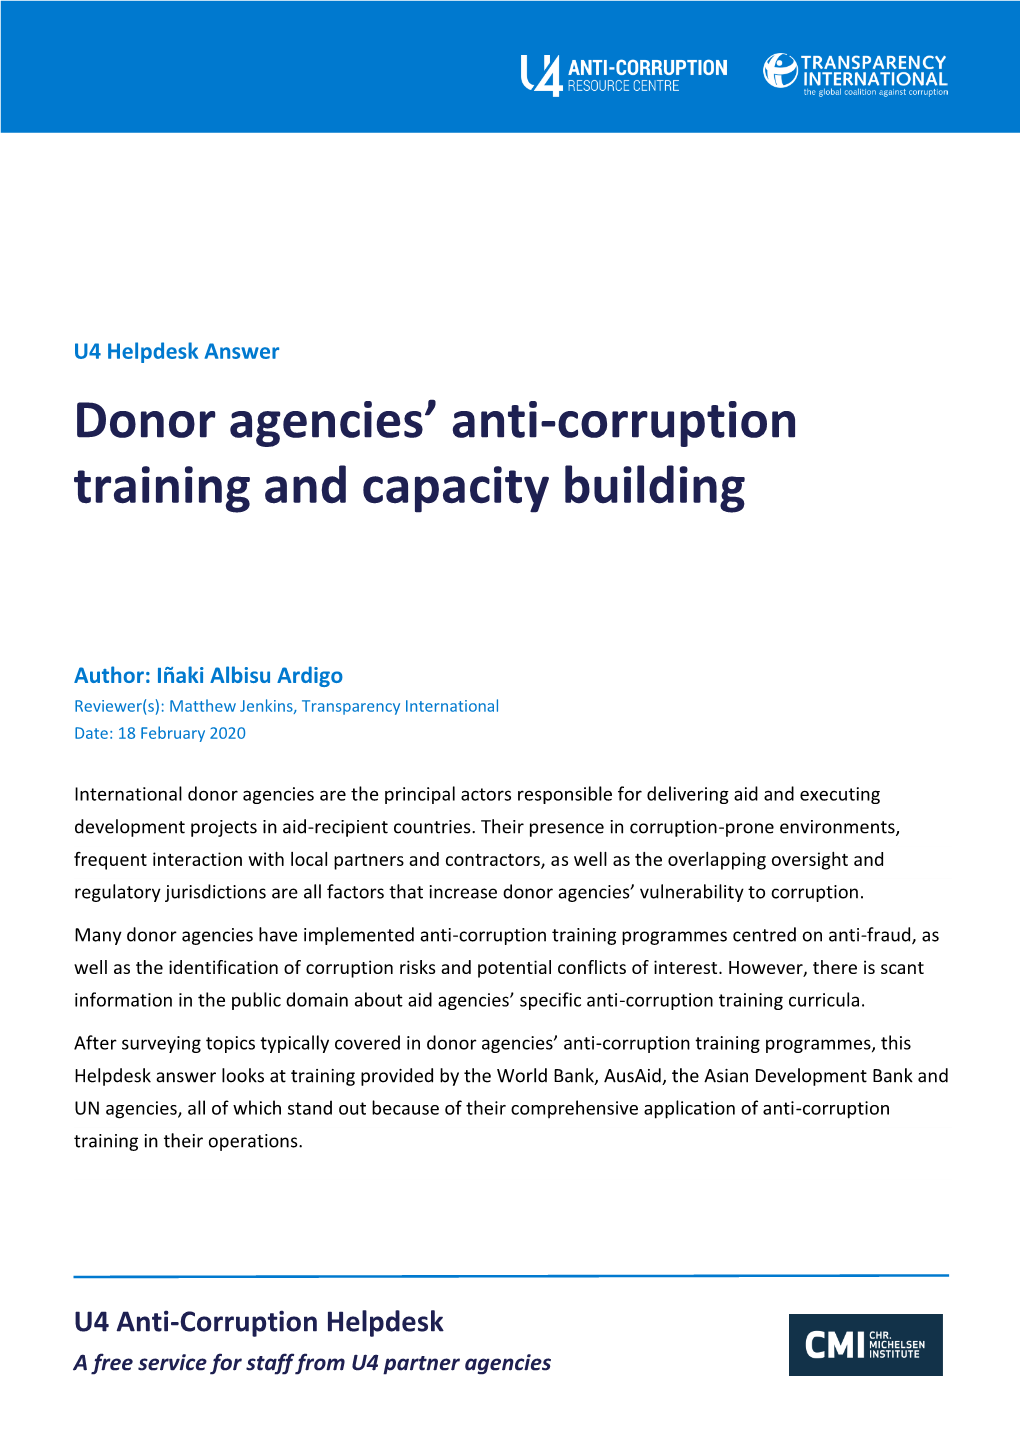 Donor Agencies' Anti-Corruption Training and Capacity Building